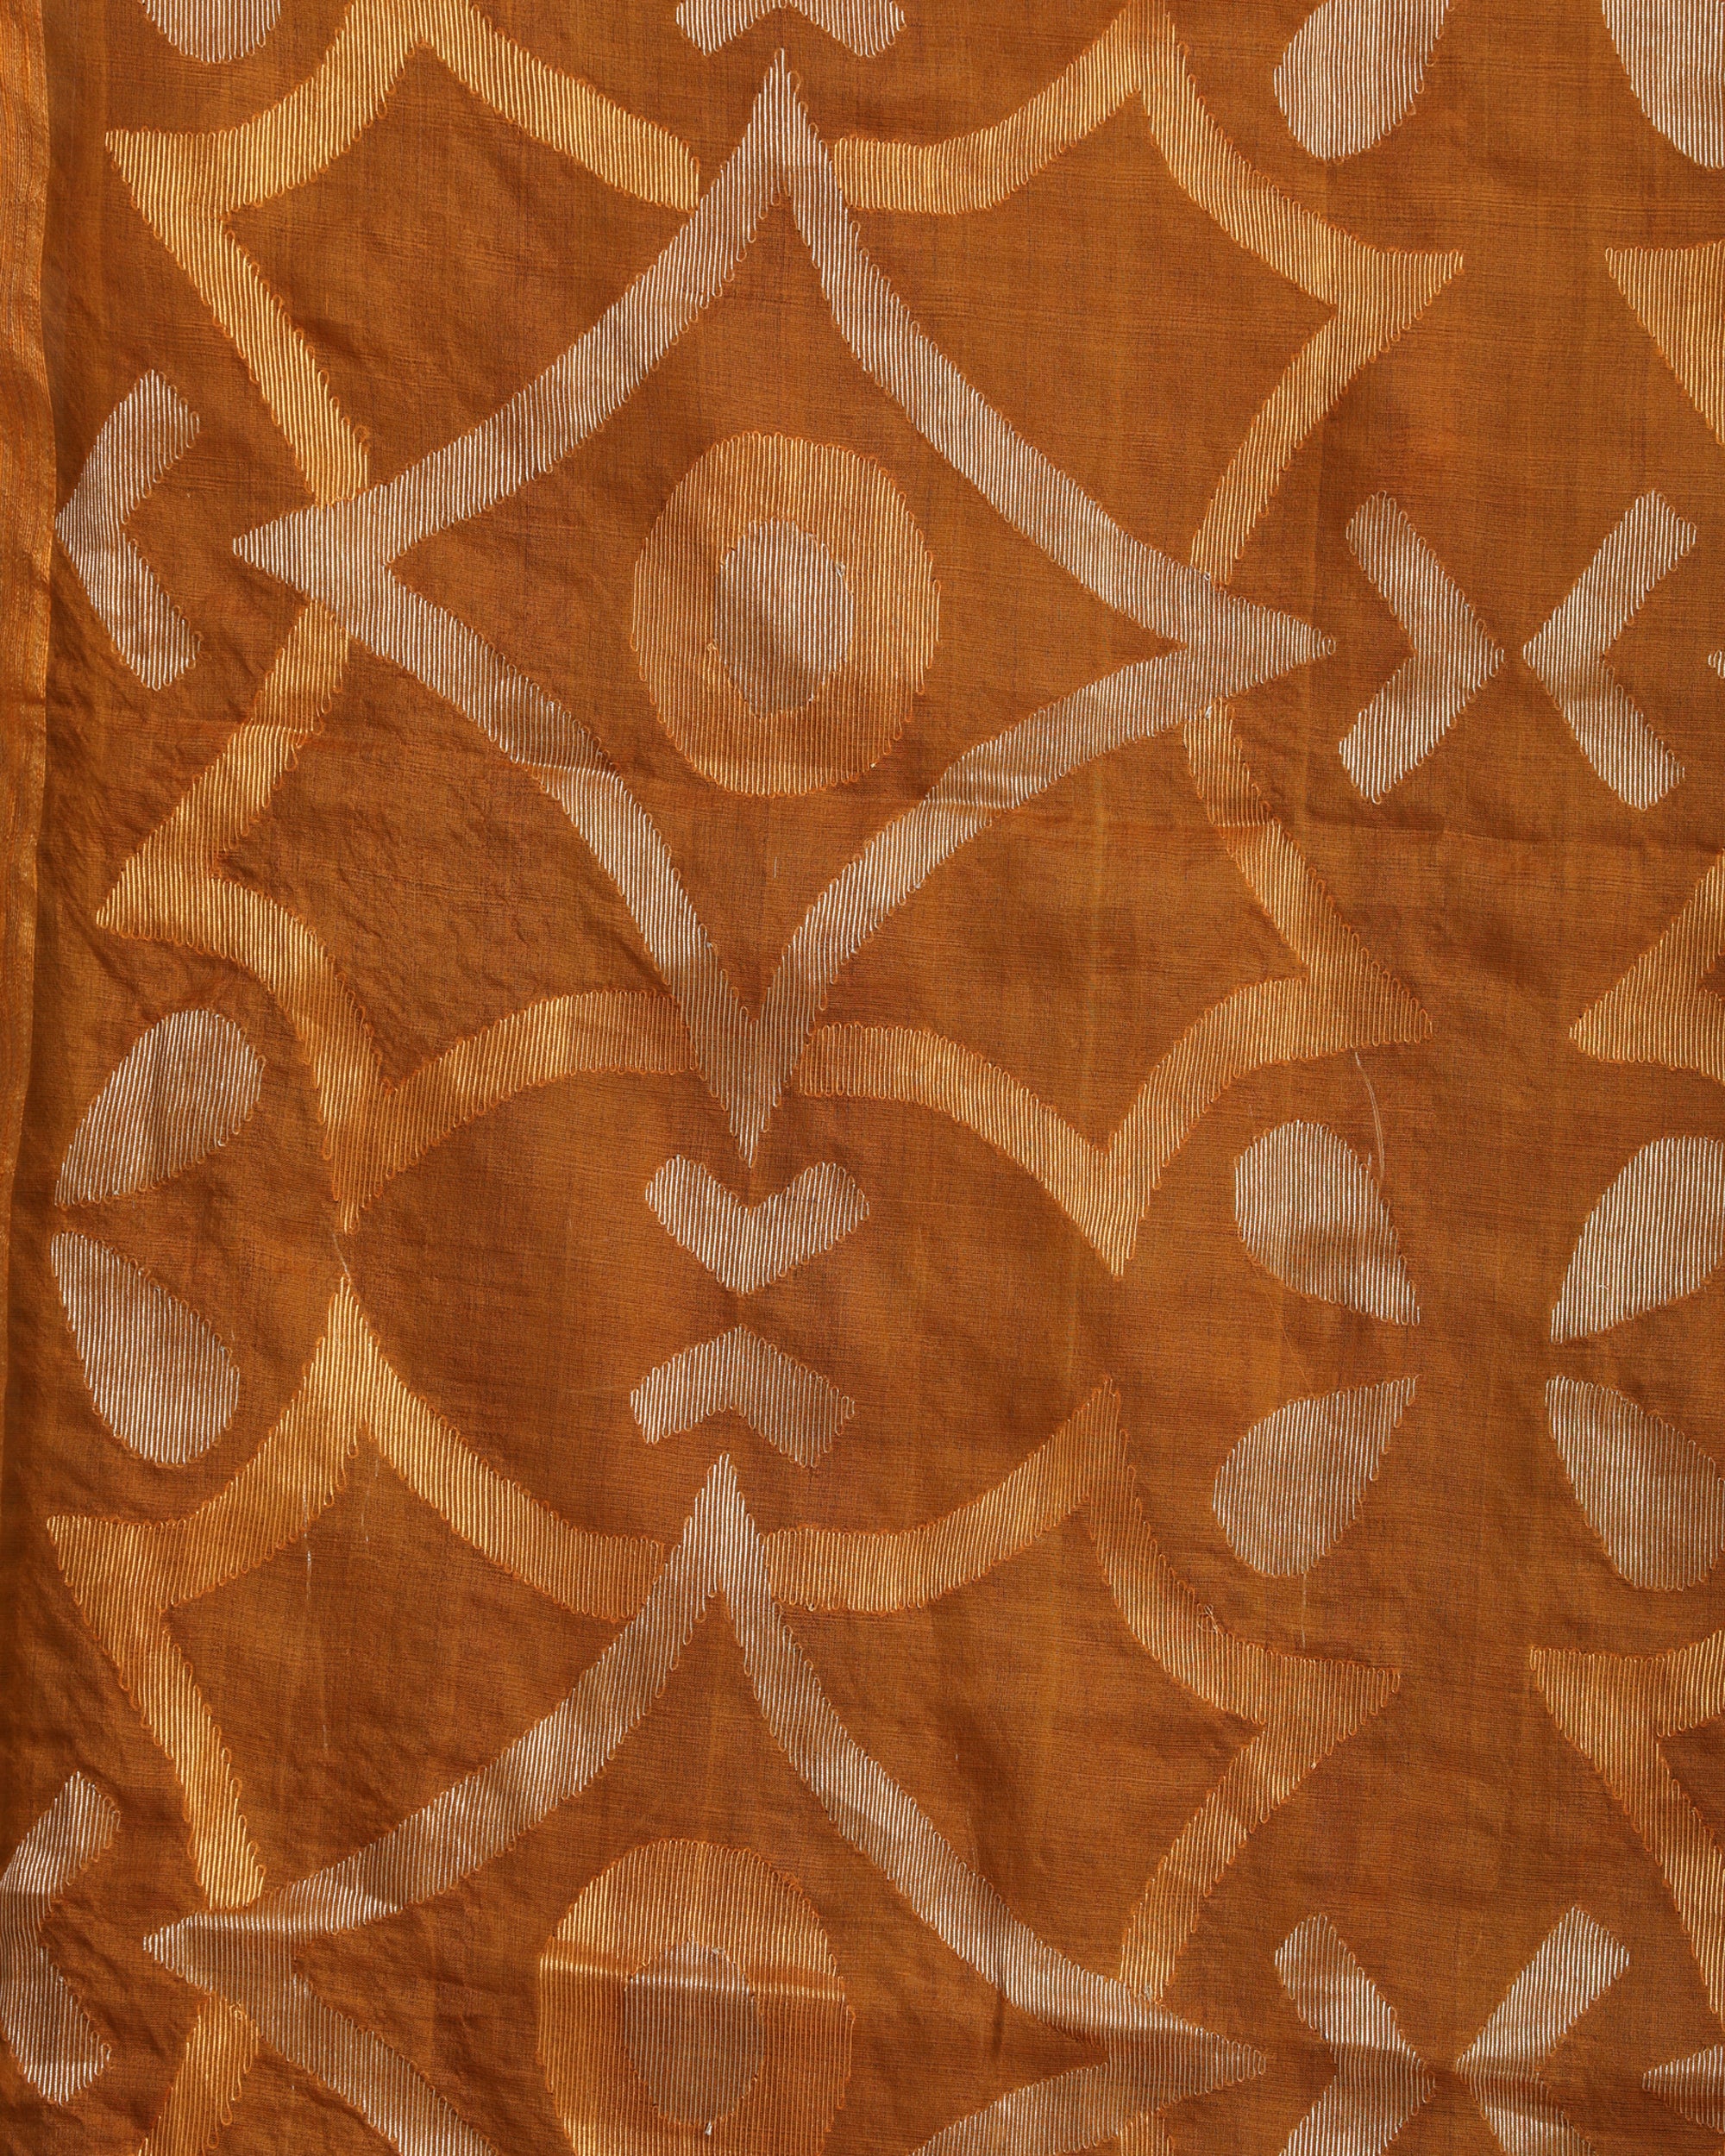 Women's Orange Matka Silk Handloom Traditional Sequin Jamdani Saree - Angoshobha